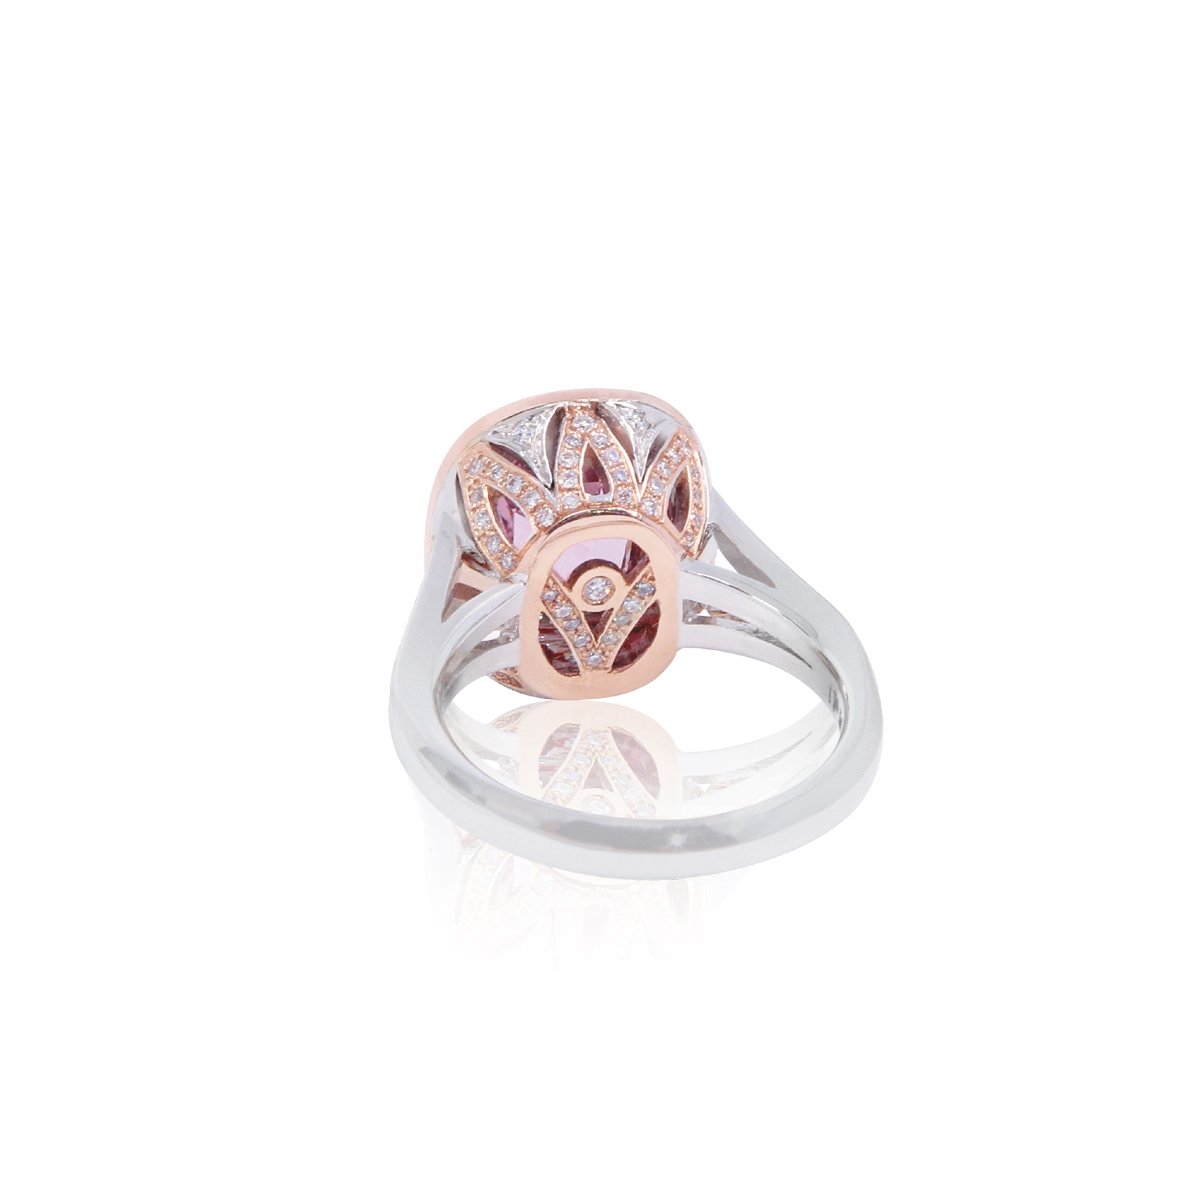 "Her Majesty" pink tourmaline ring - Surround Art & Diamonds Jewelry by Surround Art & Diamonds